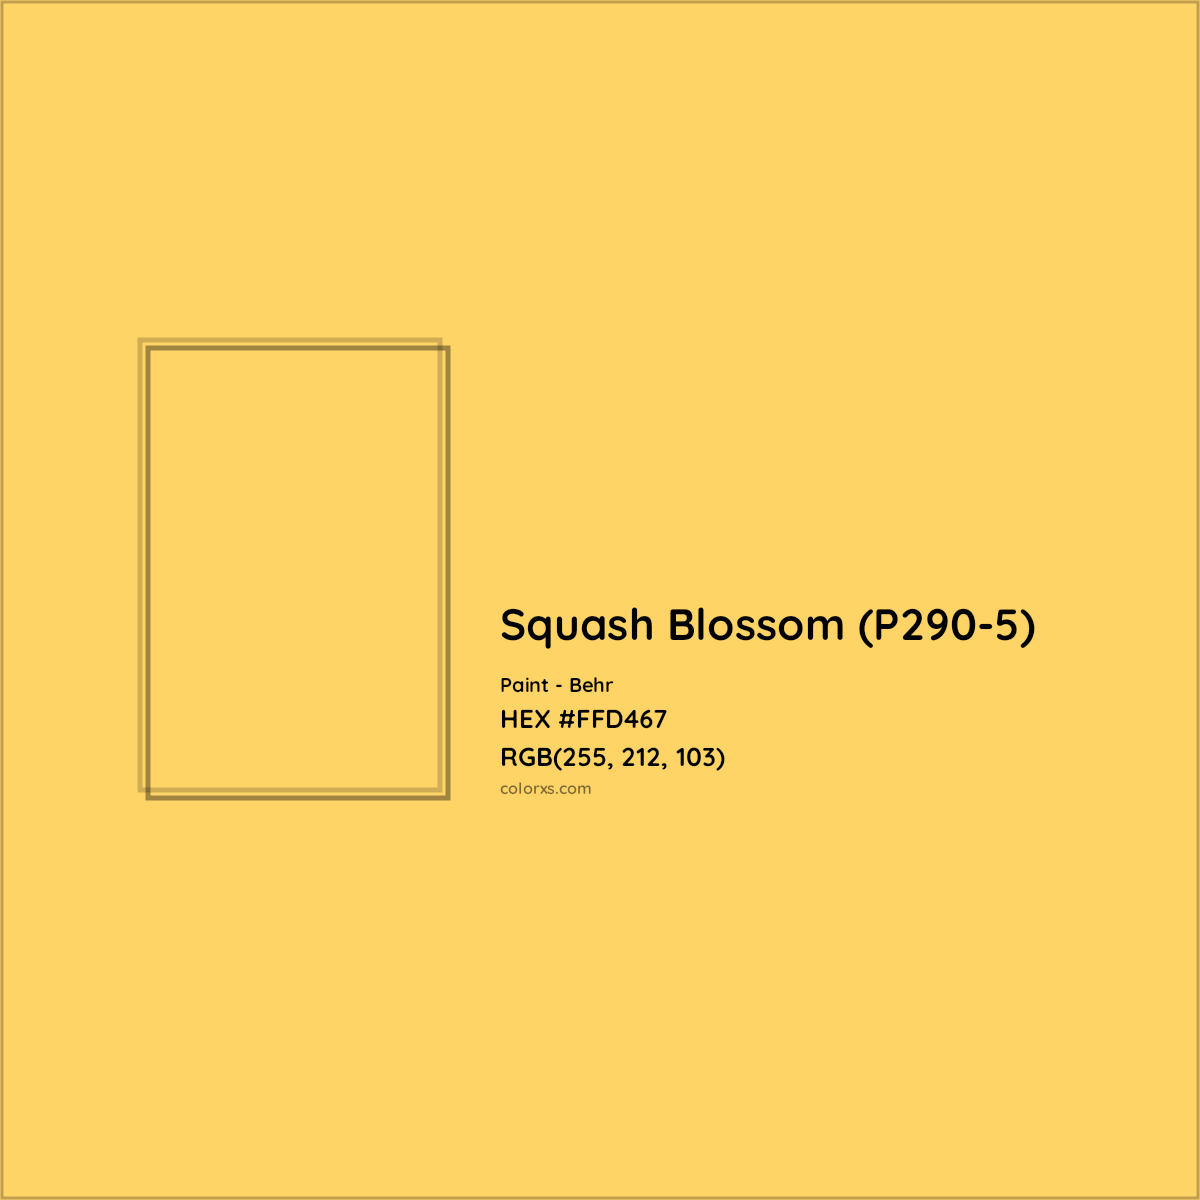 HEX #FFD467 Squash Blossom (P290-5) Paint Behr - Color Code